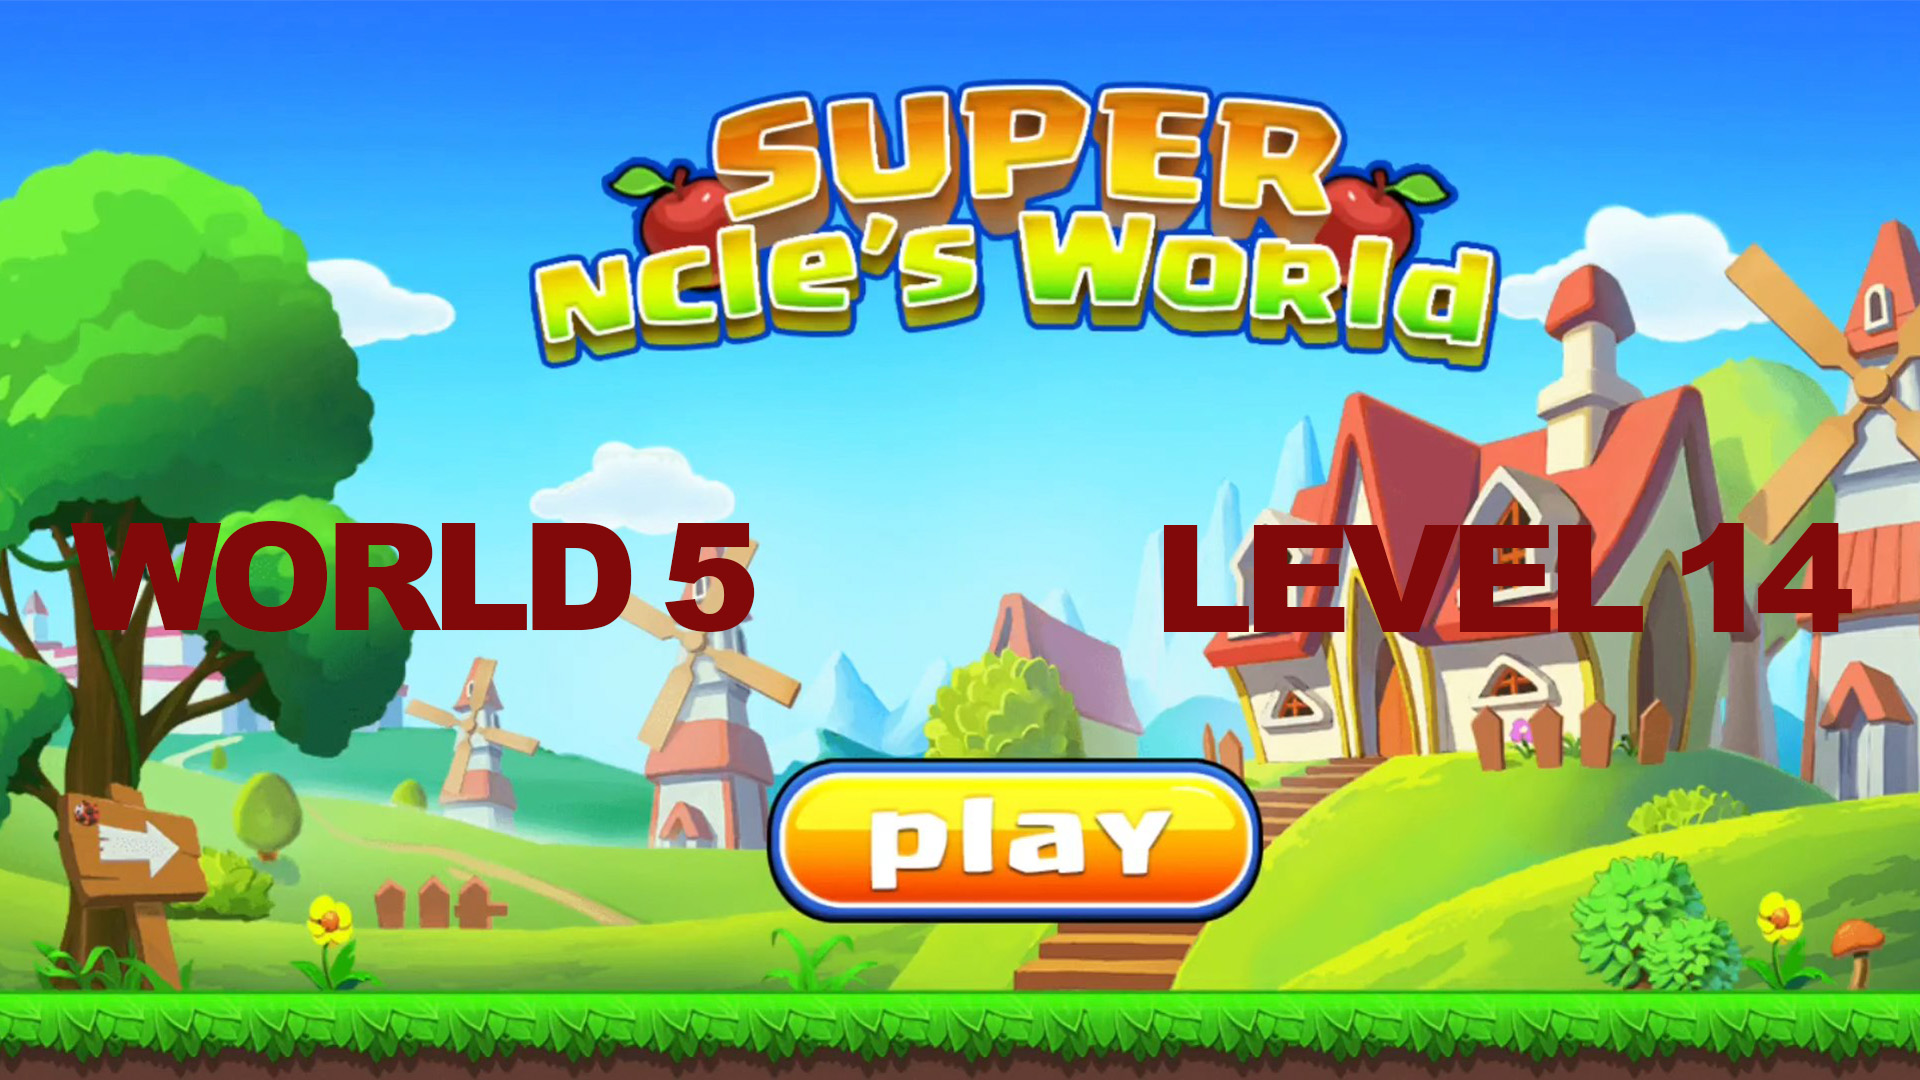 Super ncle's  World 5. Level 14.